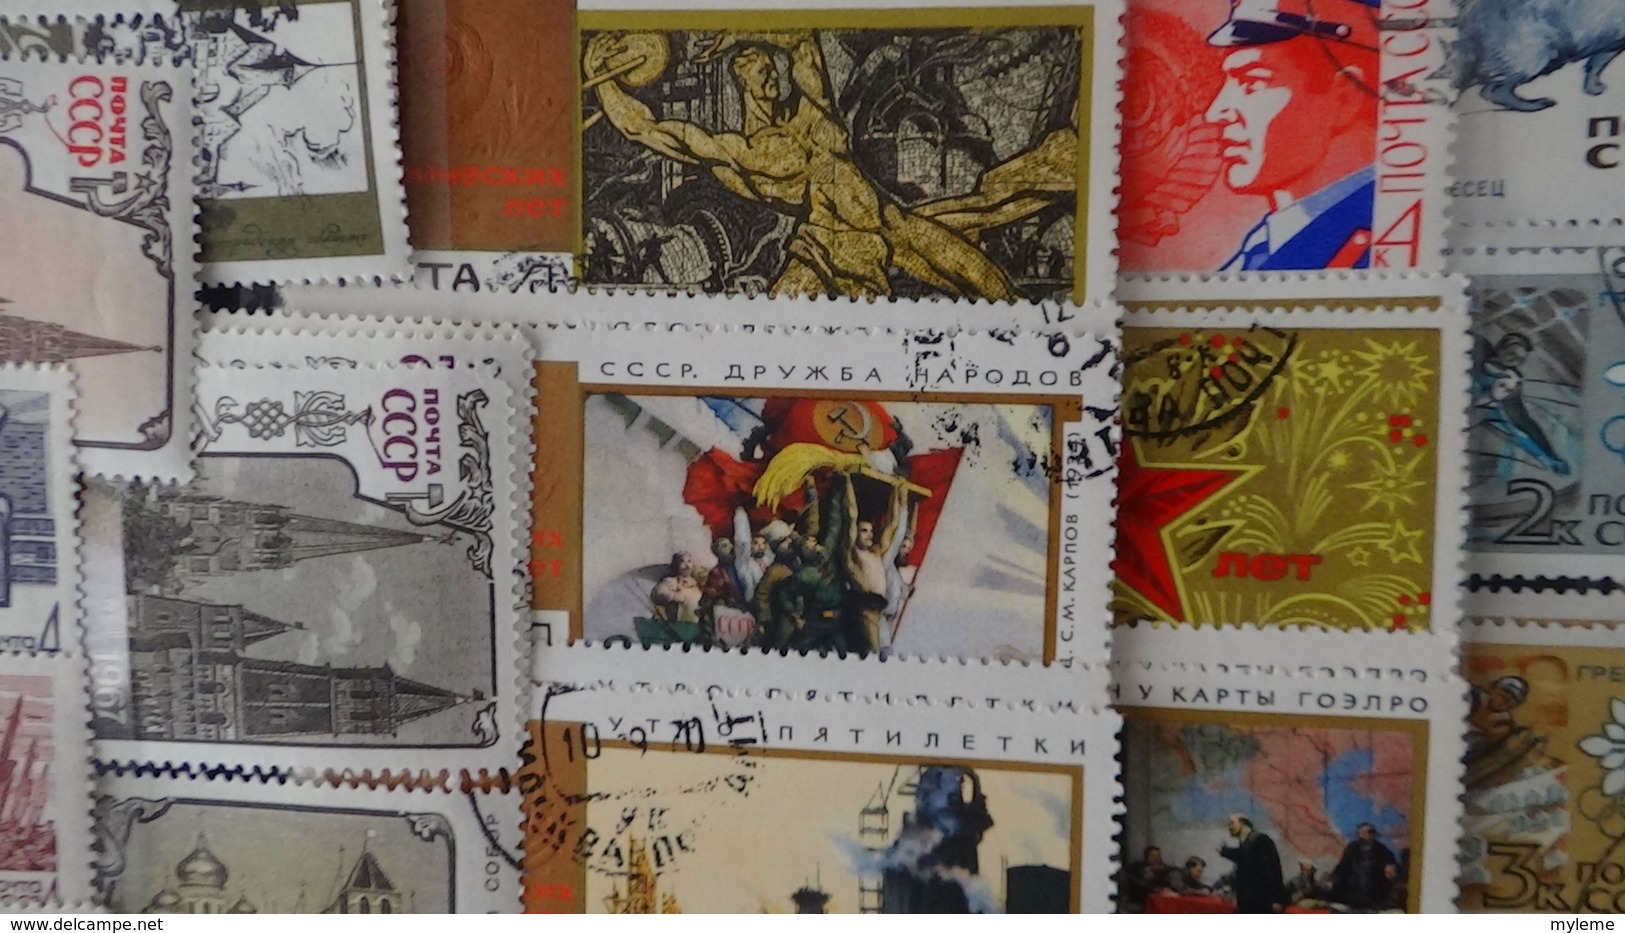 Collection de timbres et blocs de RUSSIE. A saisir !!!